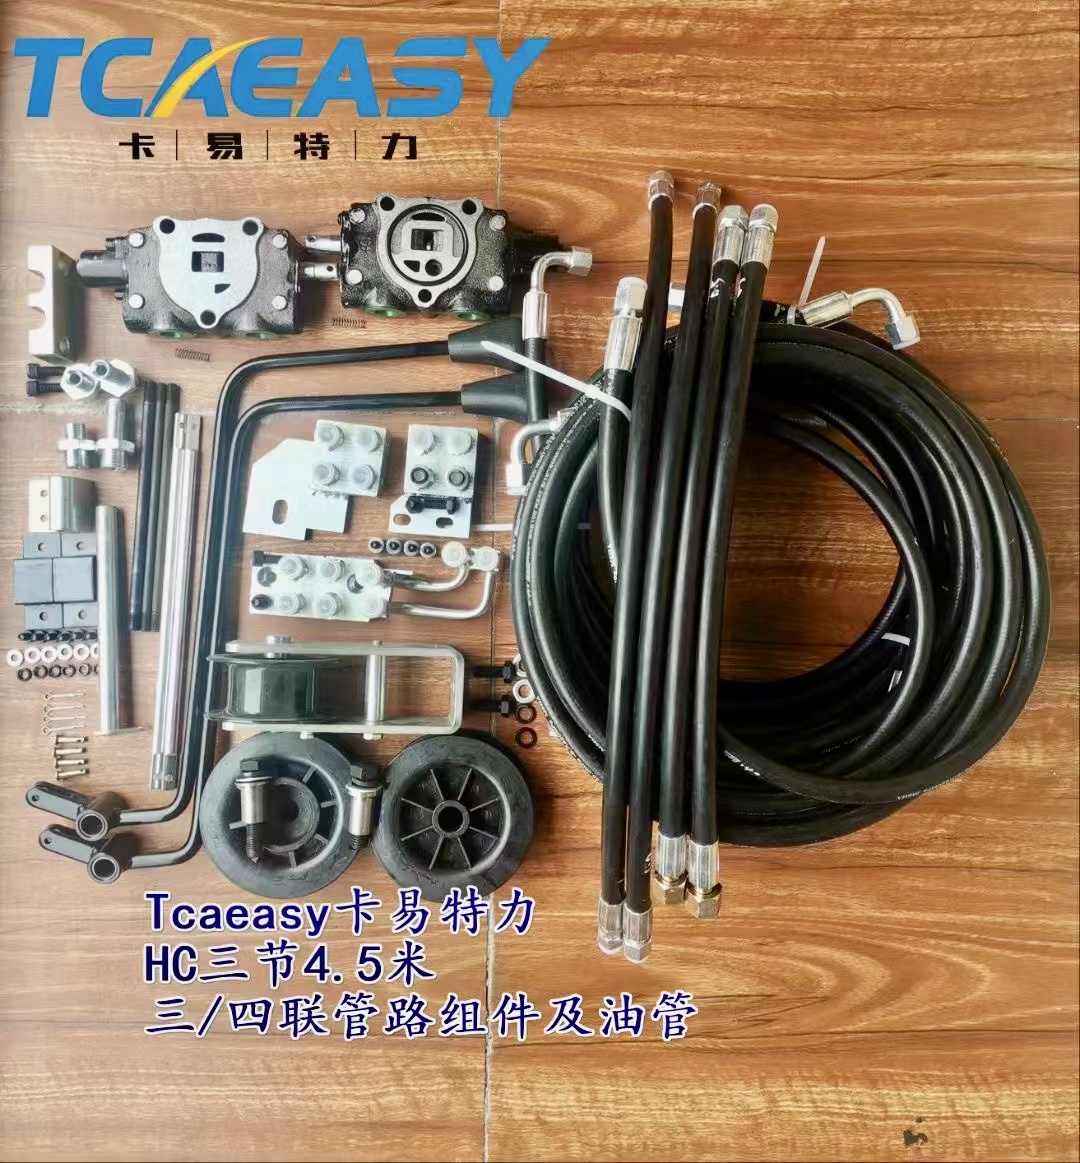 HANGZHOU Forklift Attachment Tubing HC1006